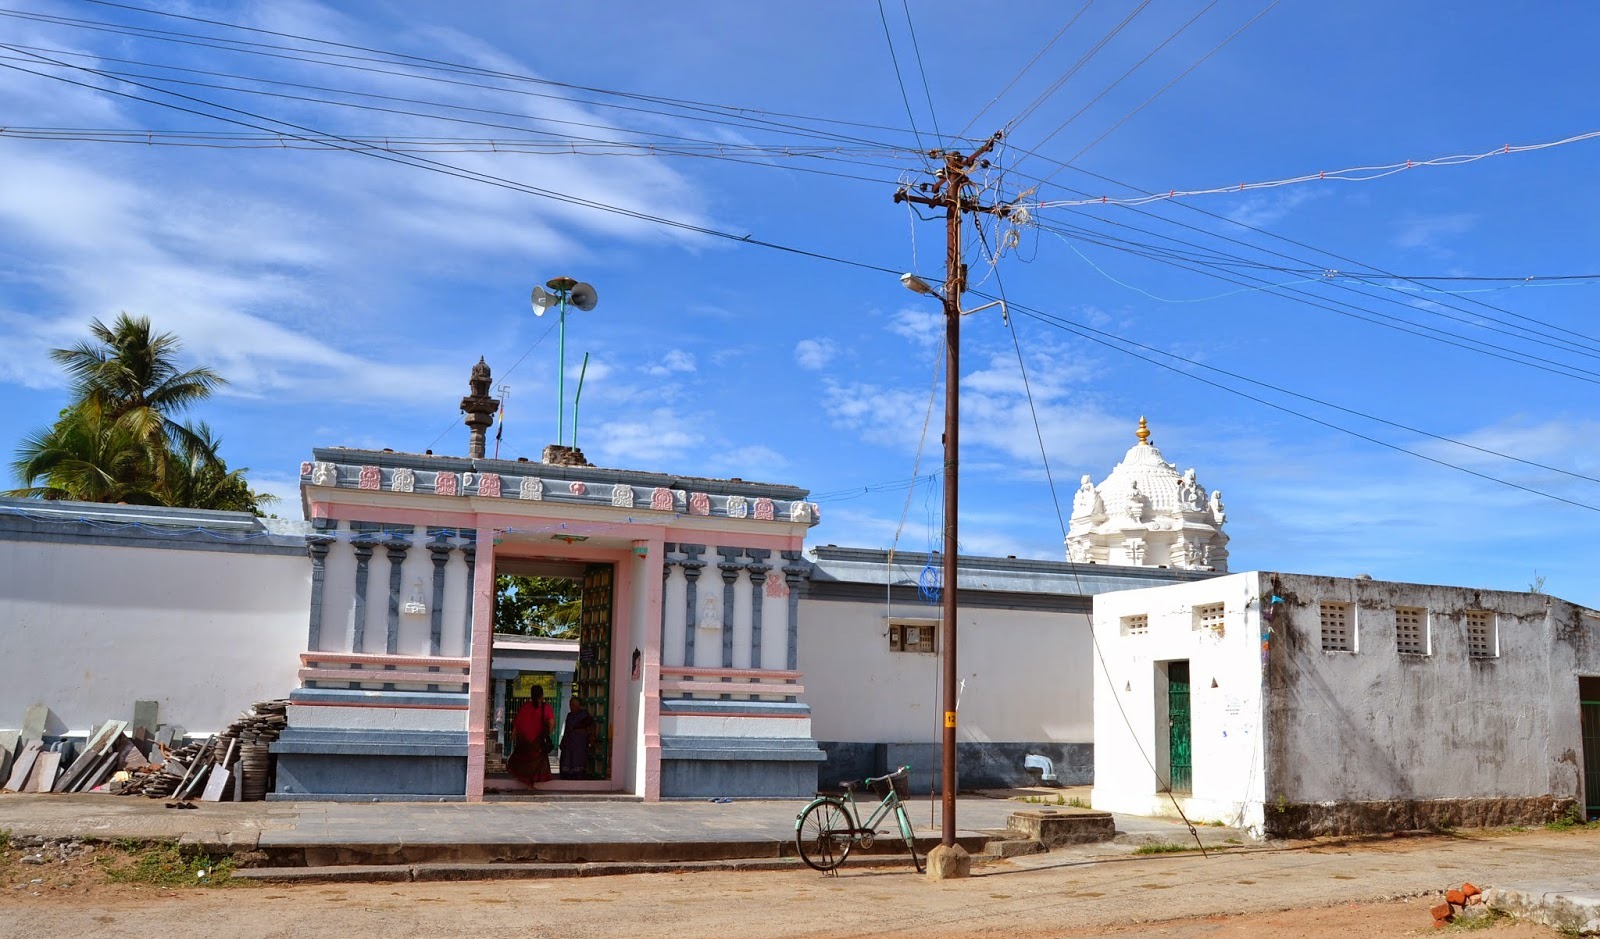 Birudur Adhinathar Jain Temple – Thiruvannamalai